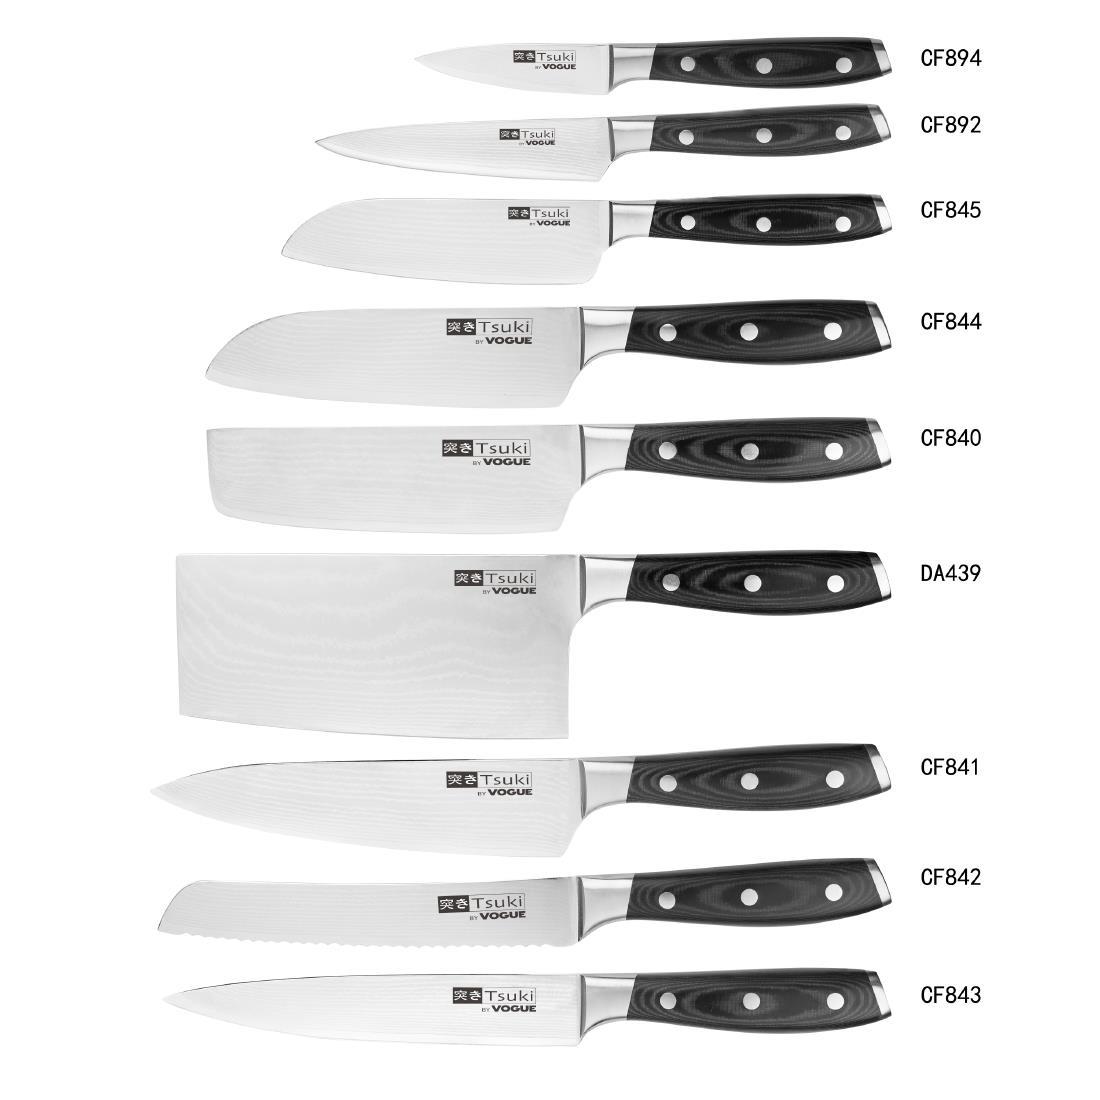 Vogue Tsuki Series 7 Chefs Knife 20.5cm - CF841  - 5